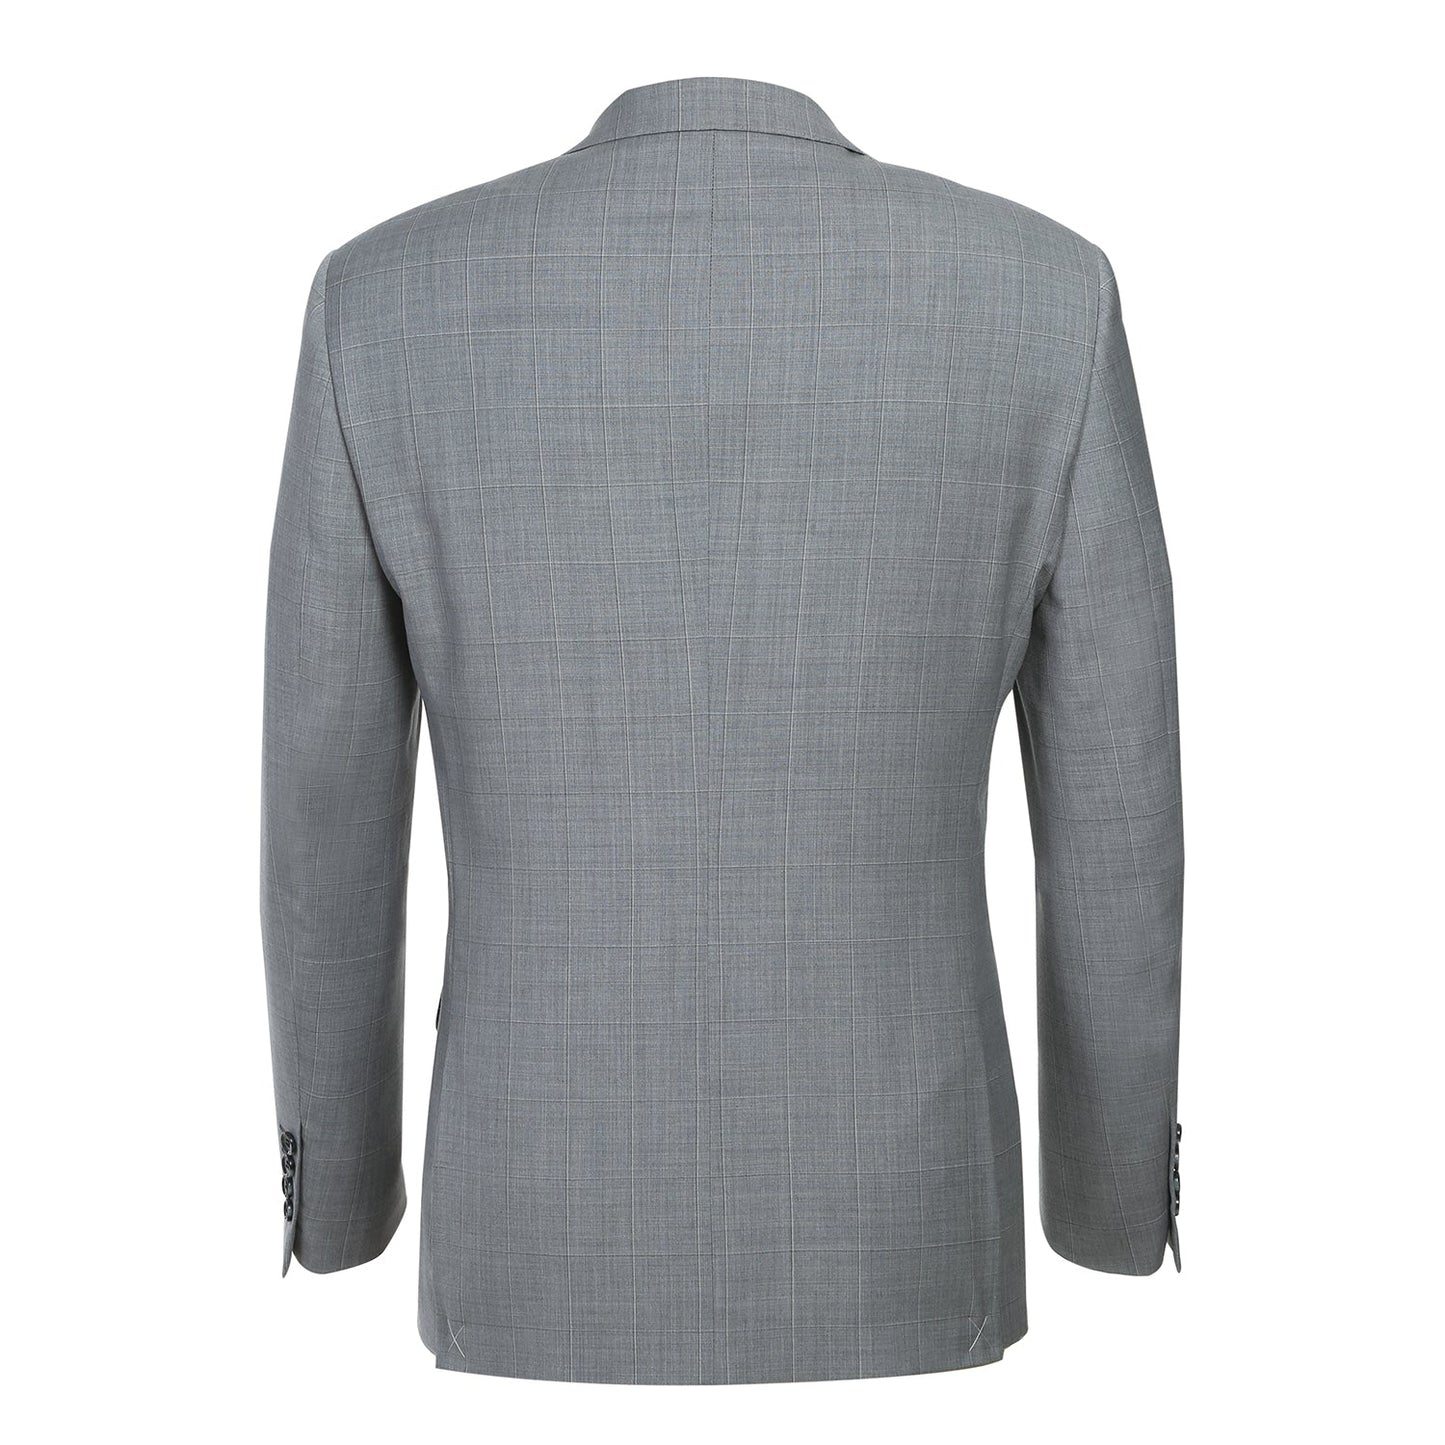 564-1 Men's Classic Fit Wool Blend Light Grey Windowpane Suit